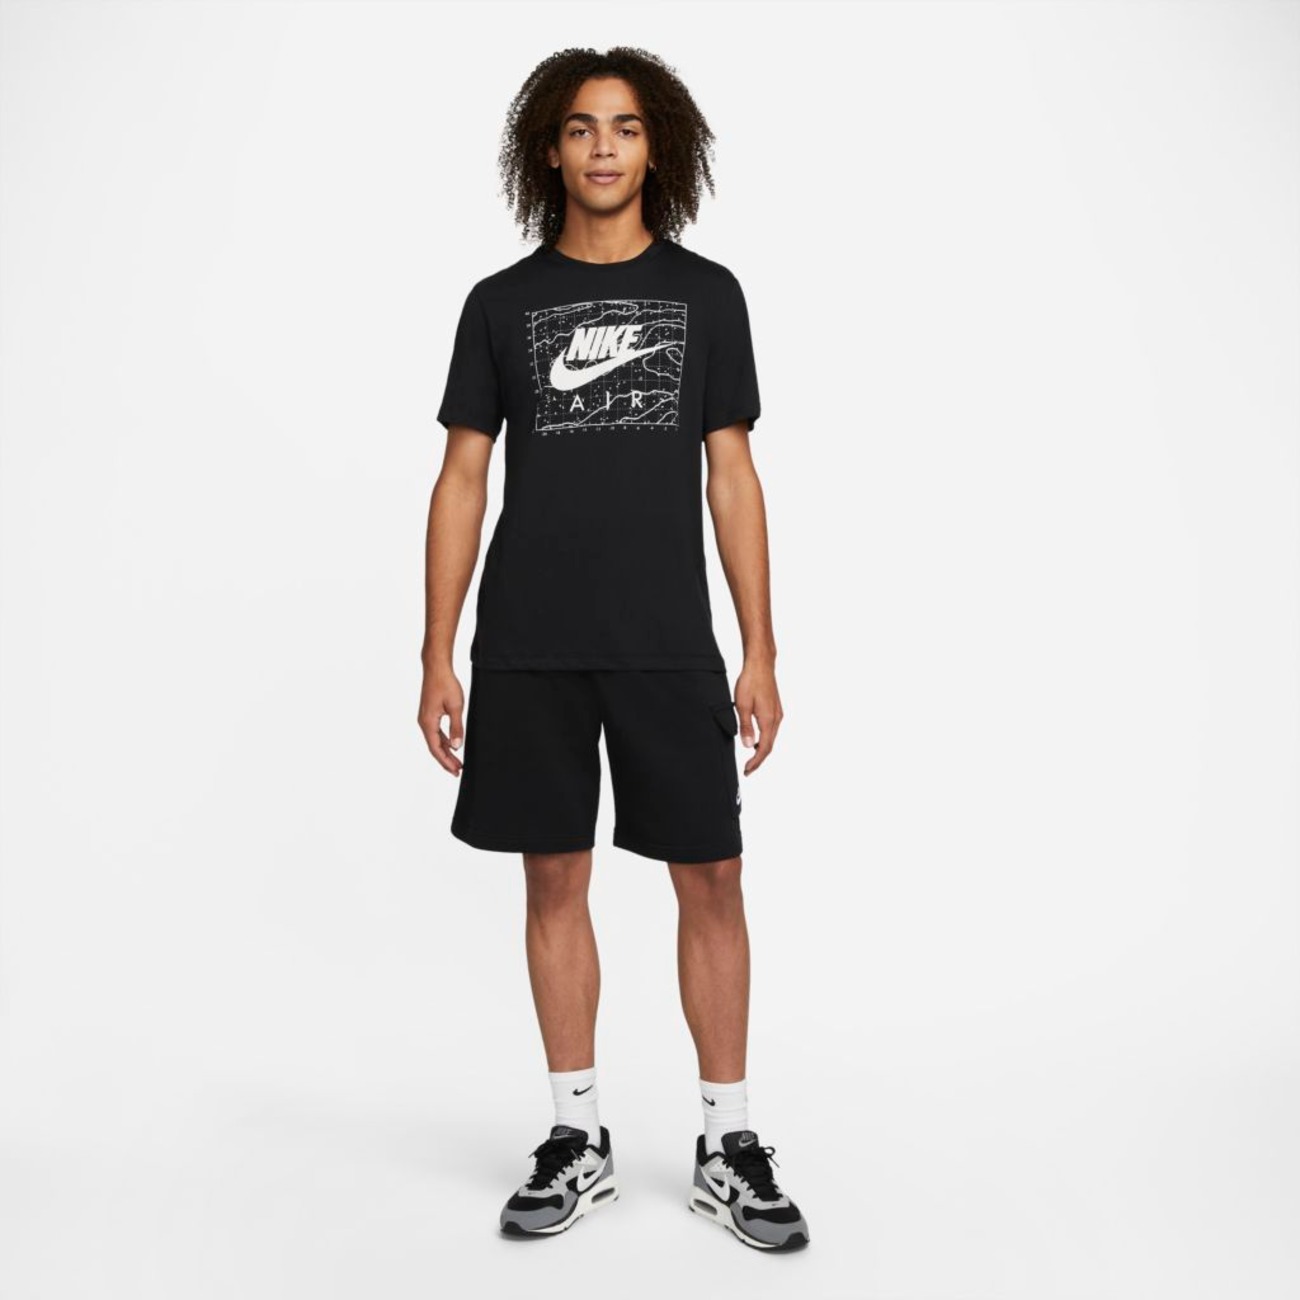 Camiseta Nike Air Masculina - Foto 9